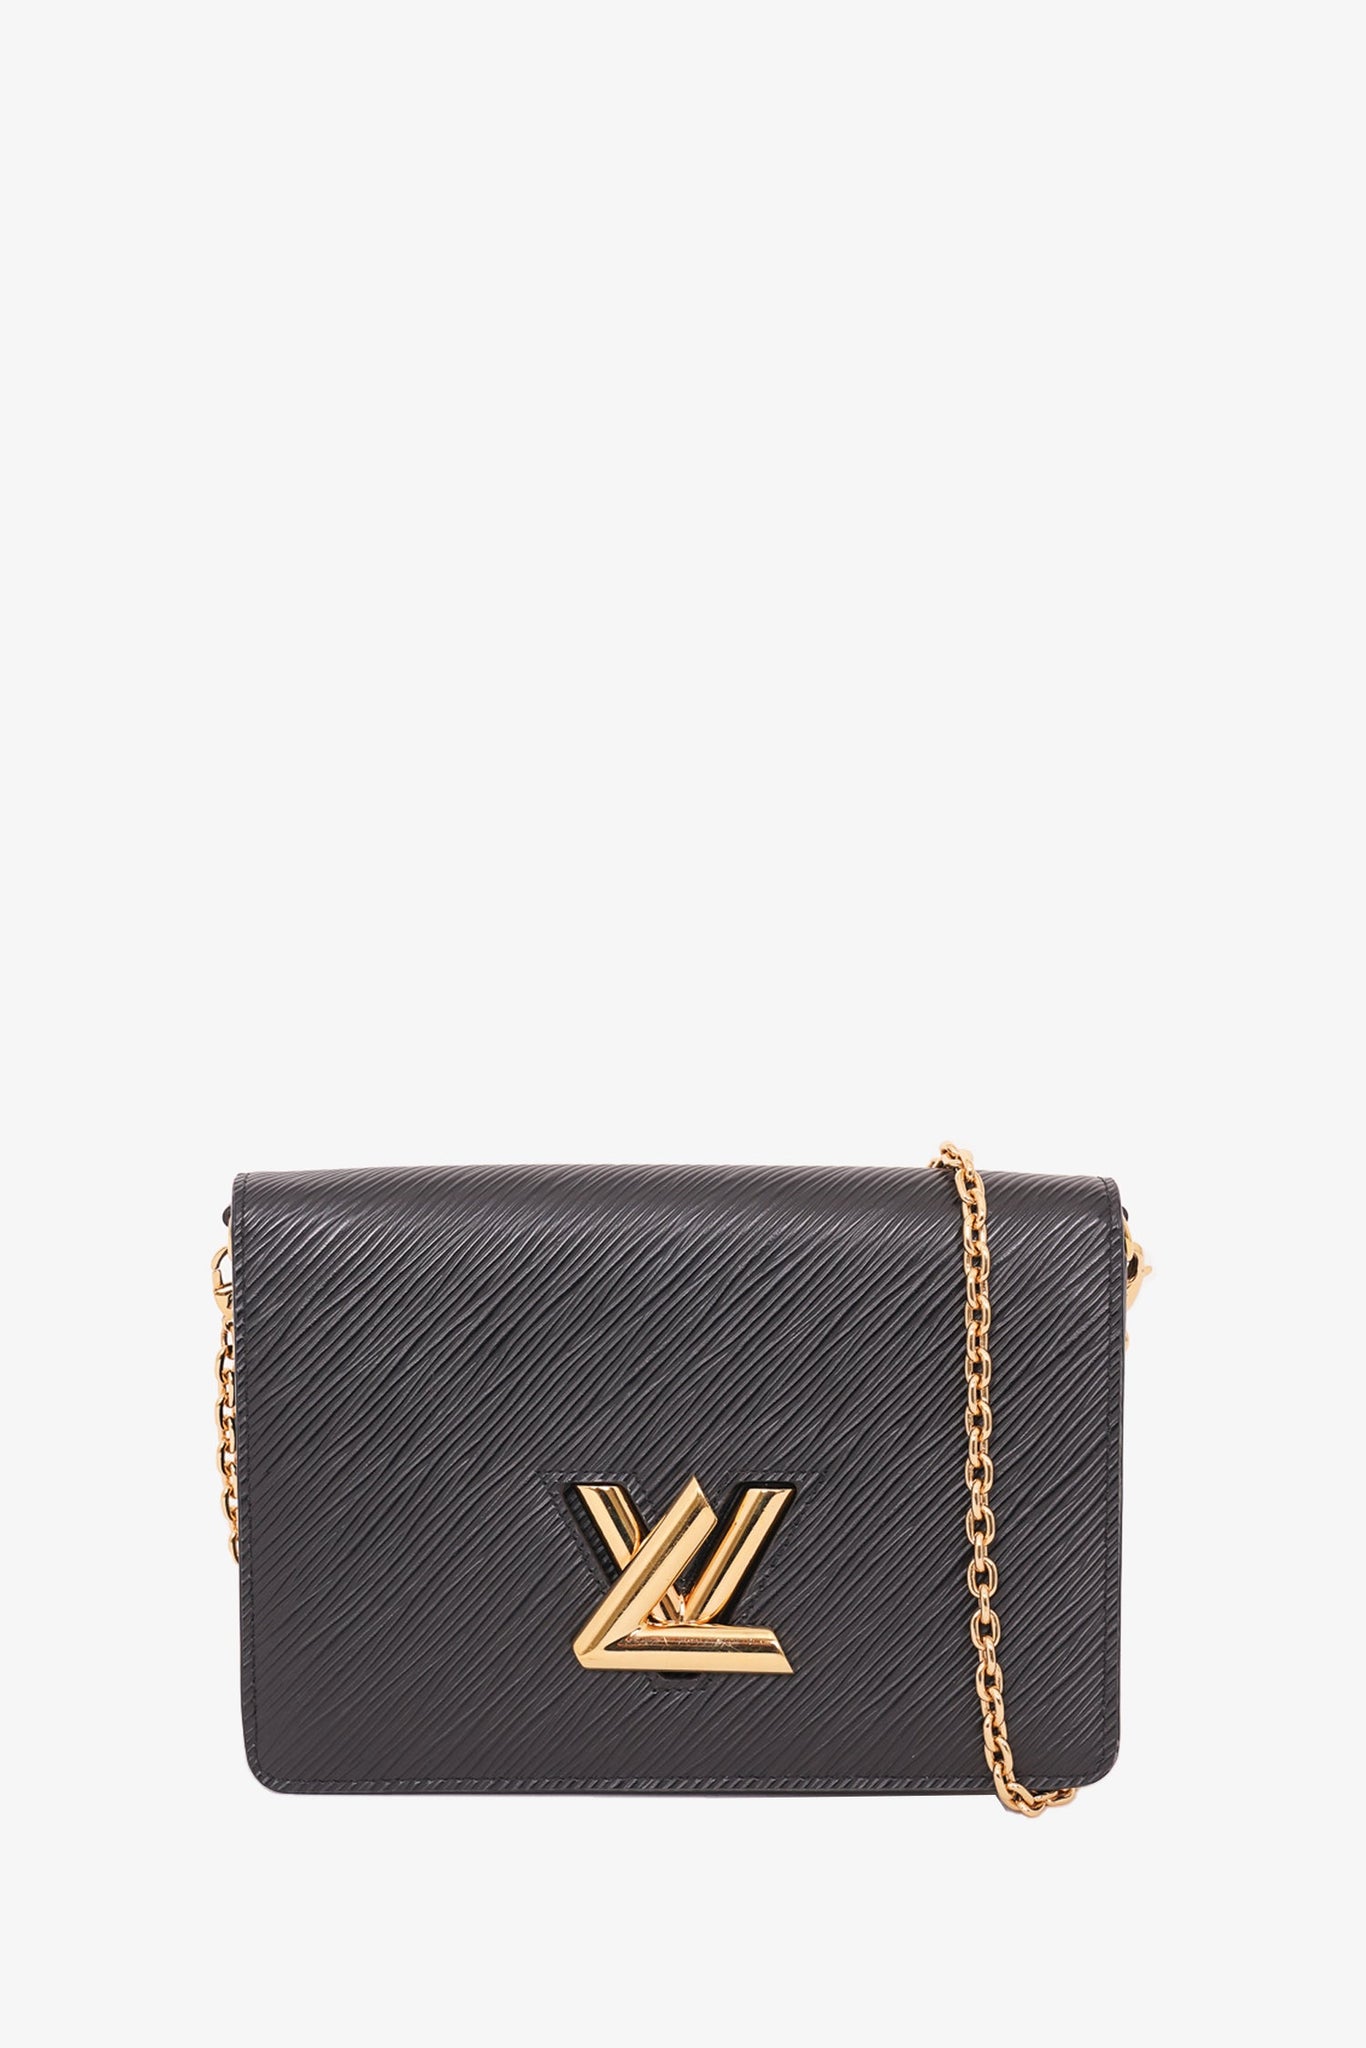 Louis Vuitton Black Epi Leather 'Twist' Wallet on Chain Gold Hardware